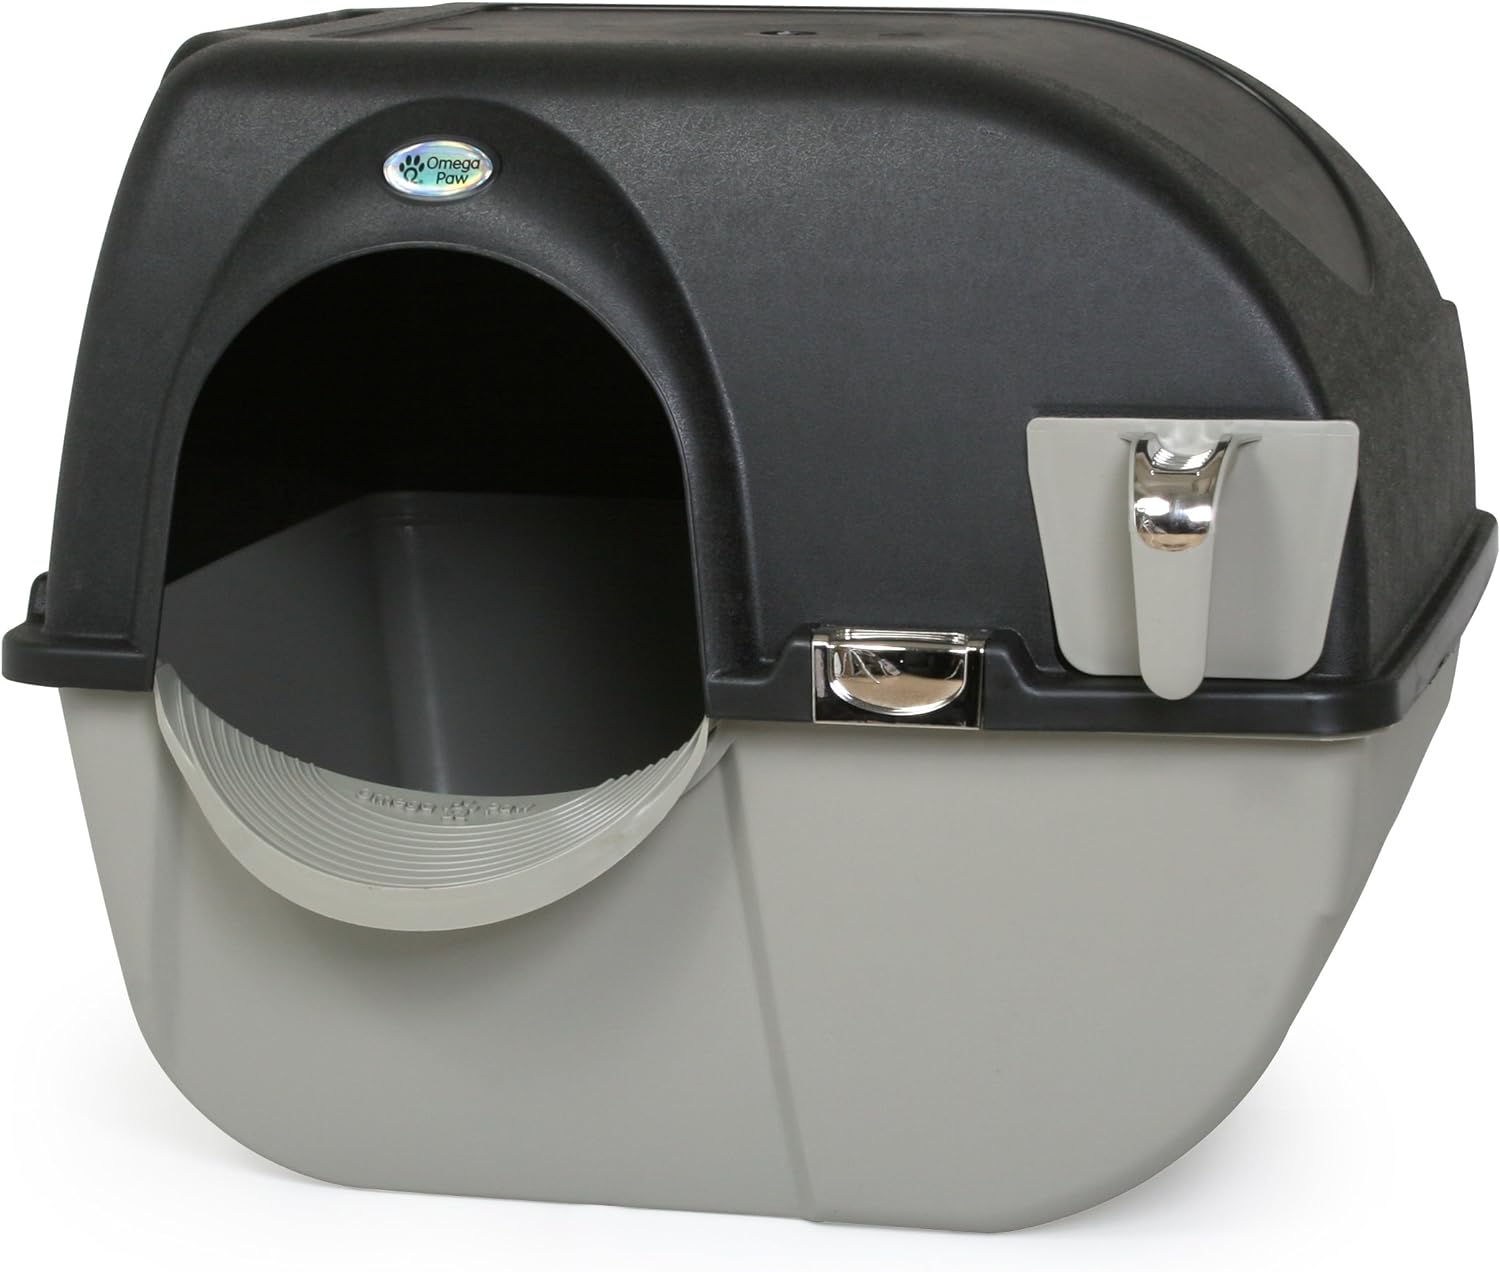 Omega Paw Elite Self-Cleaning Litter Box